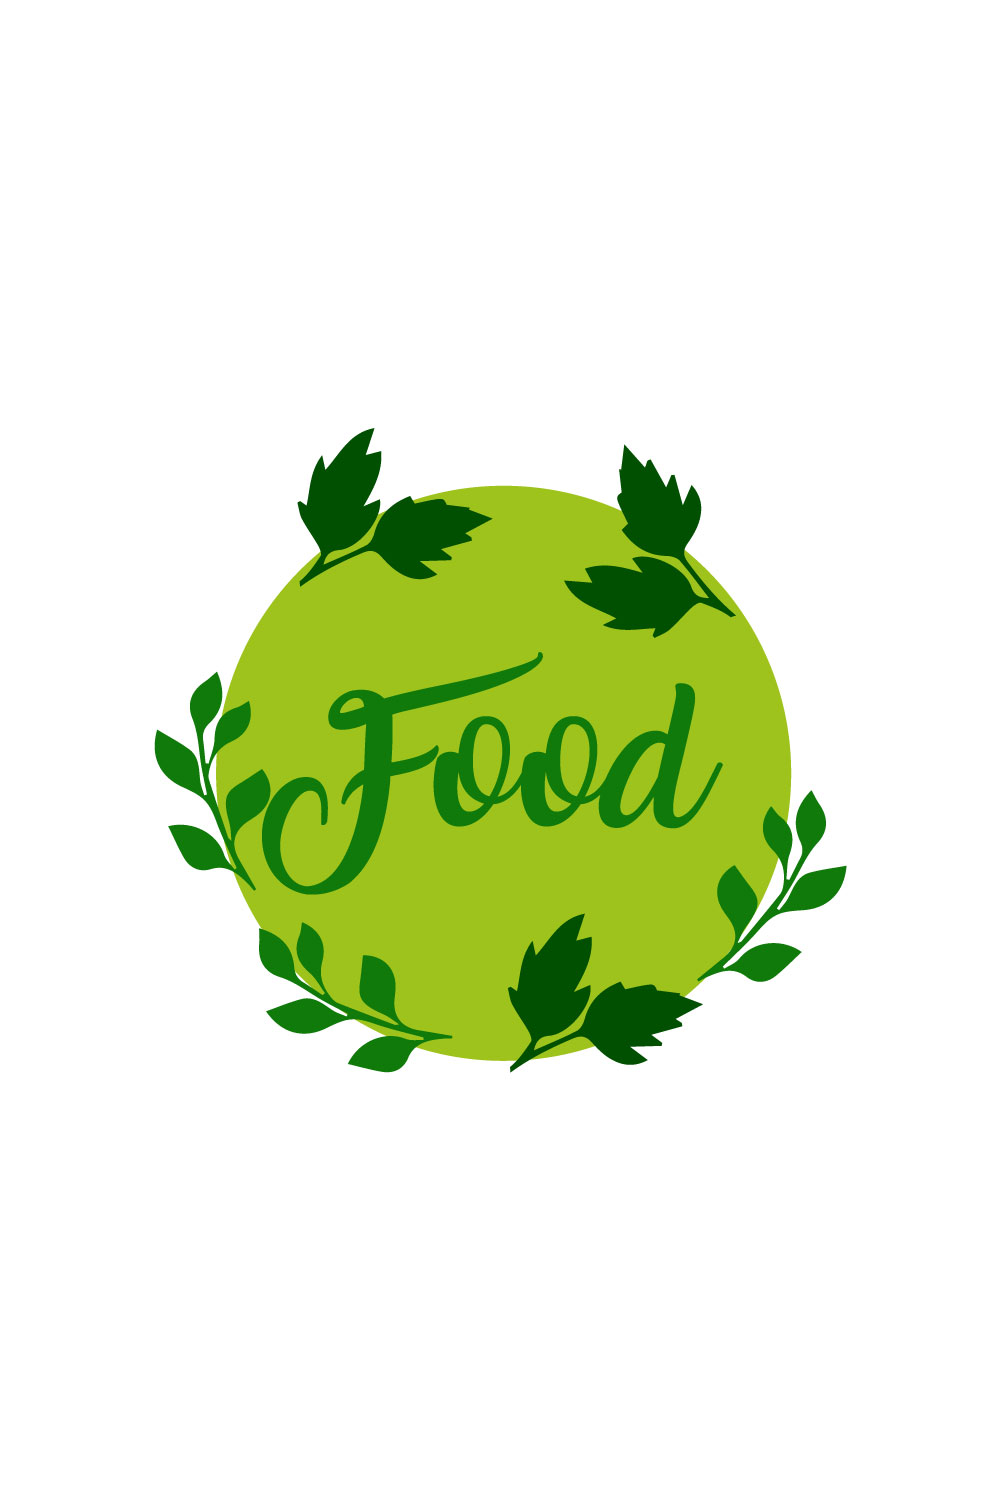 Free Farm-to-table logo pinterest preview image.